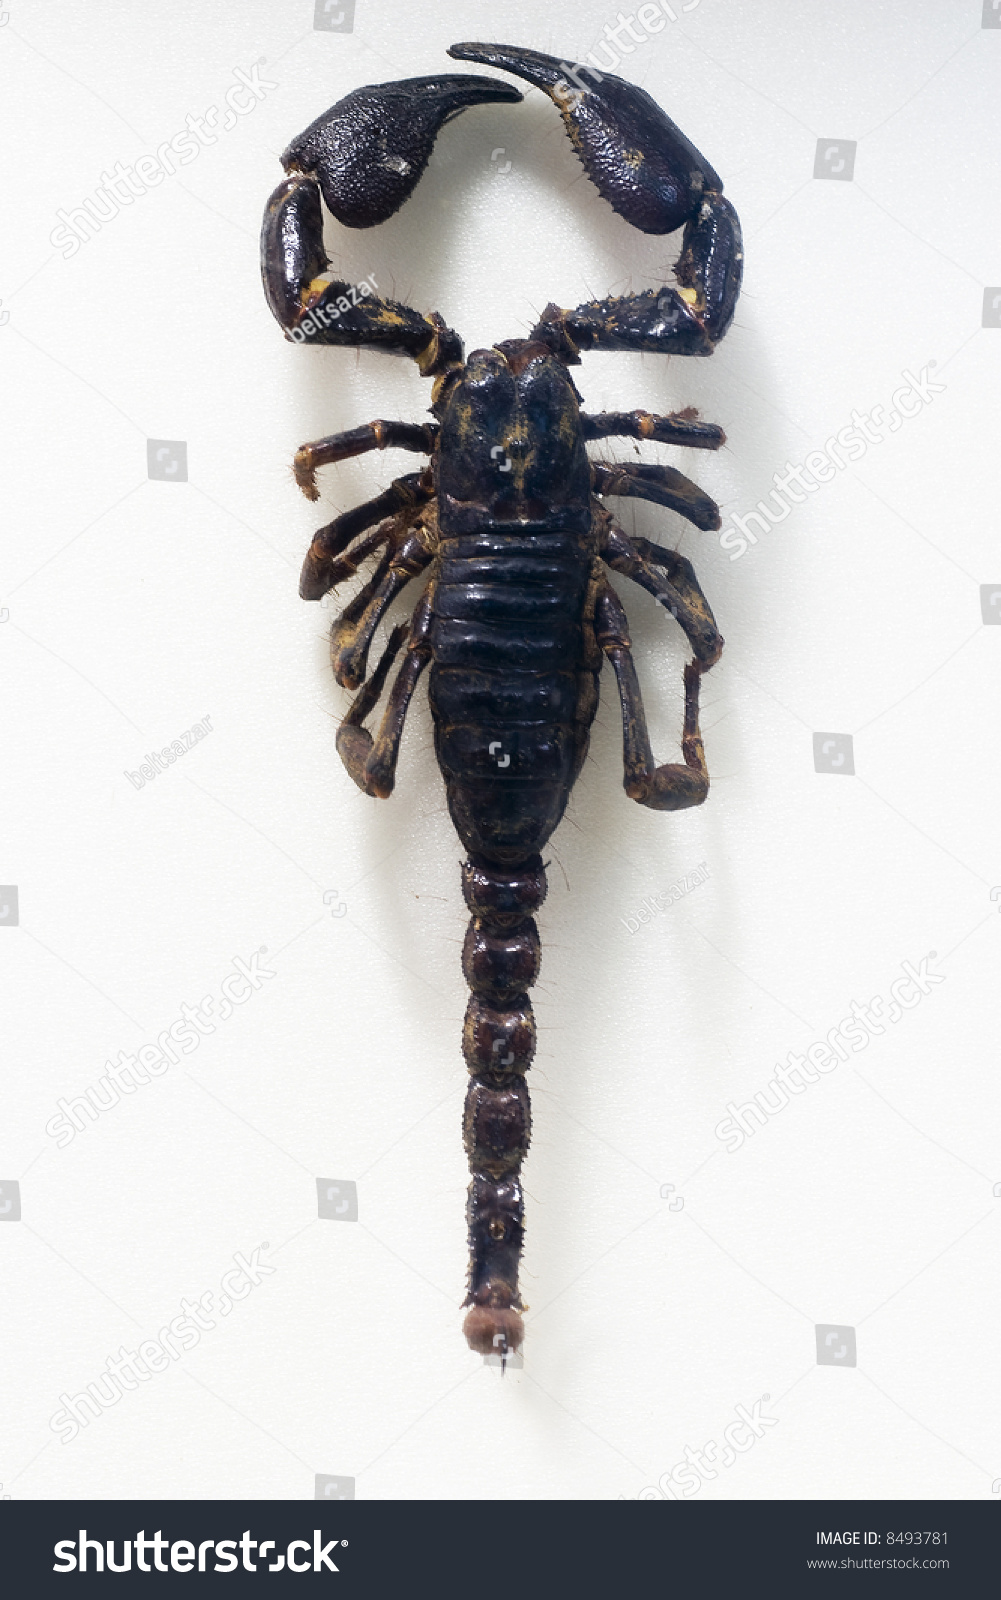 Black Scorpion Top View Stock Photo 8493781 : Shutterstock